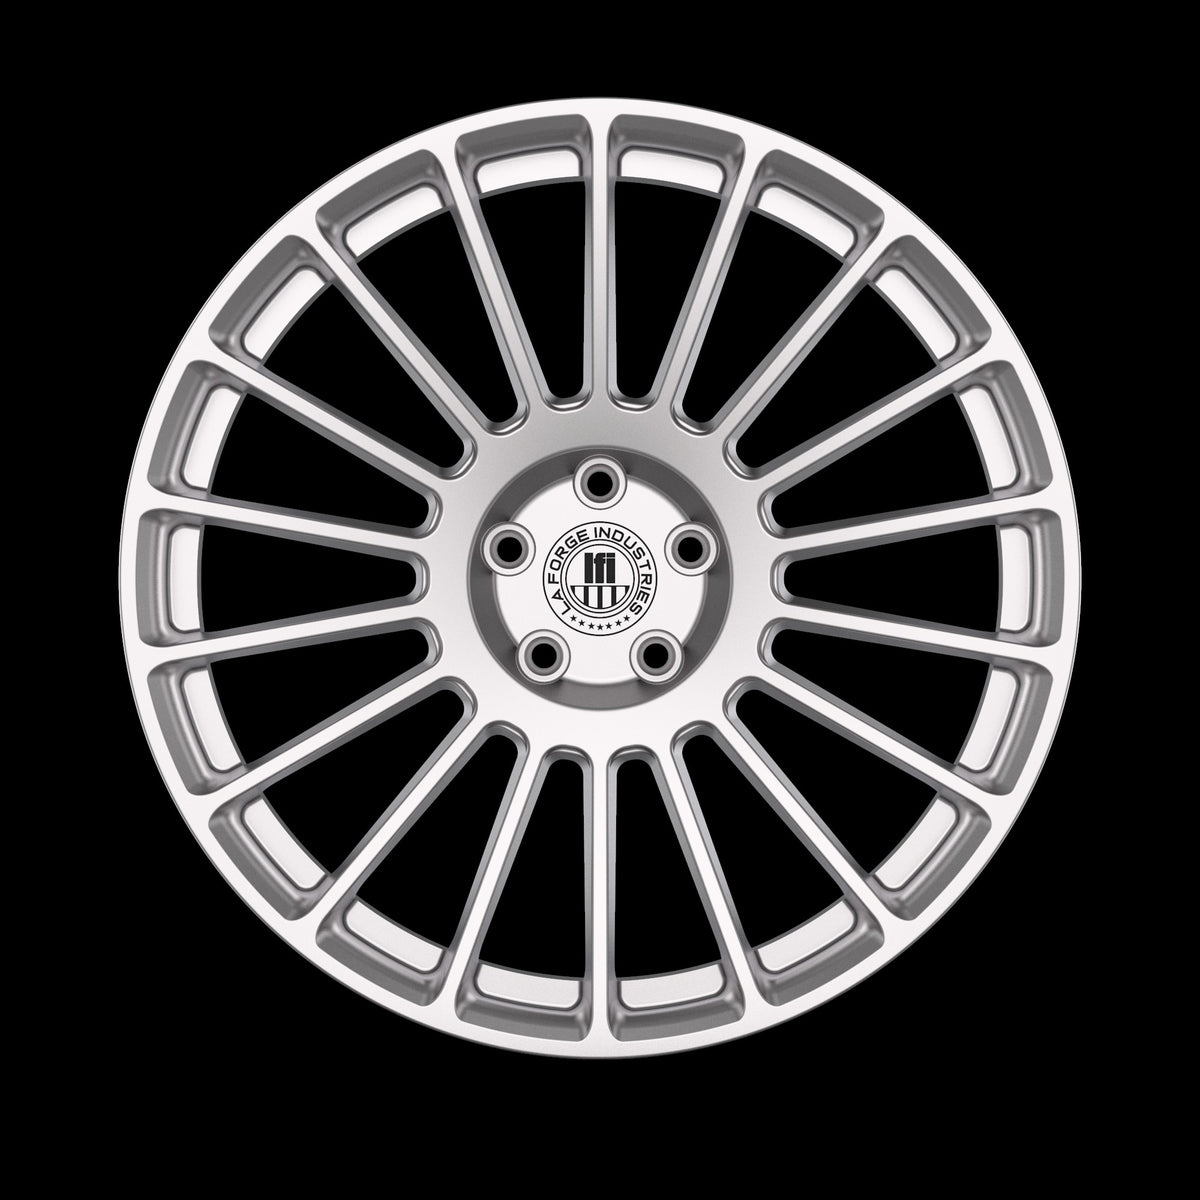 MF33 Monobloc Forged Wheel